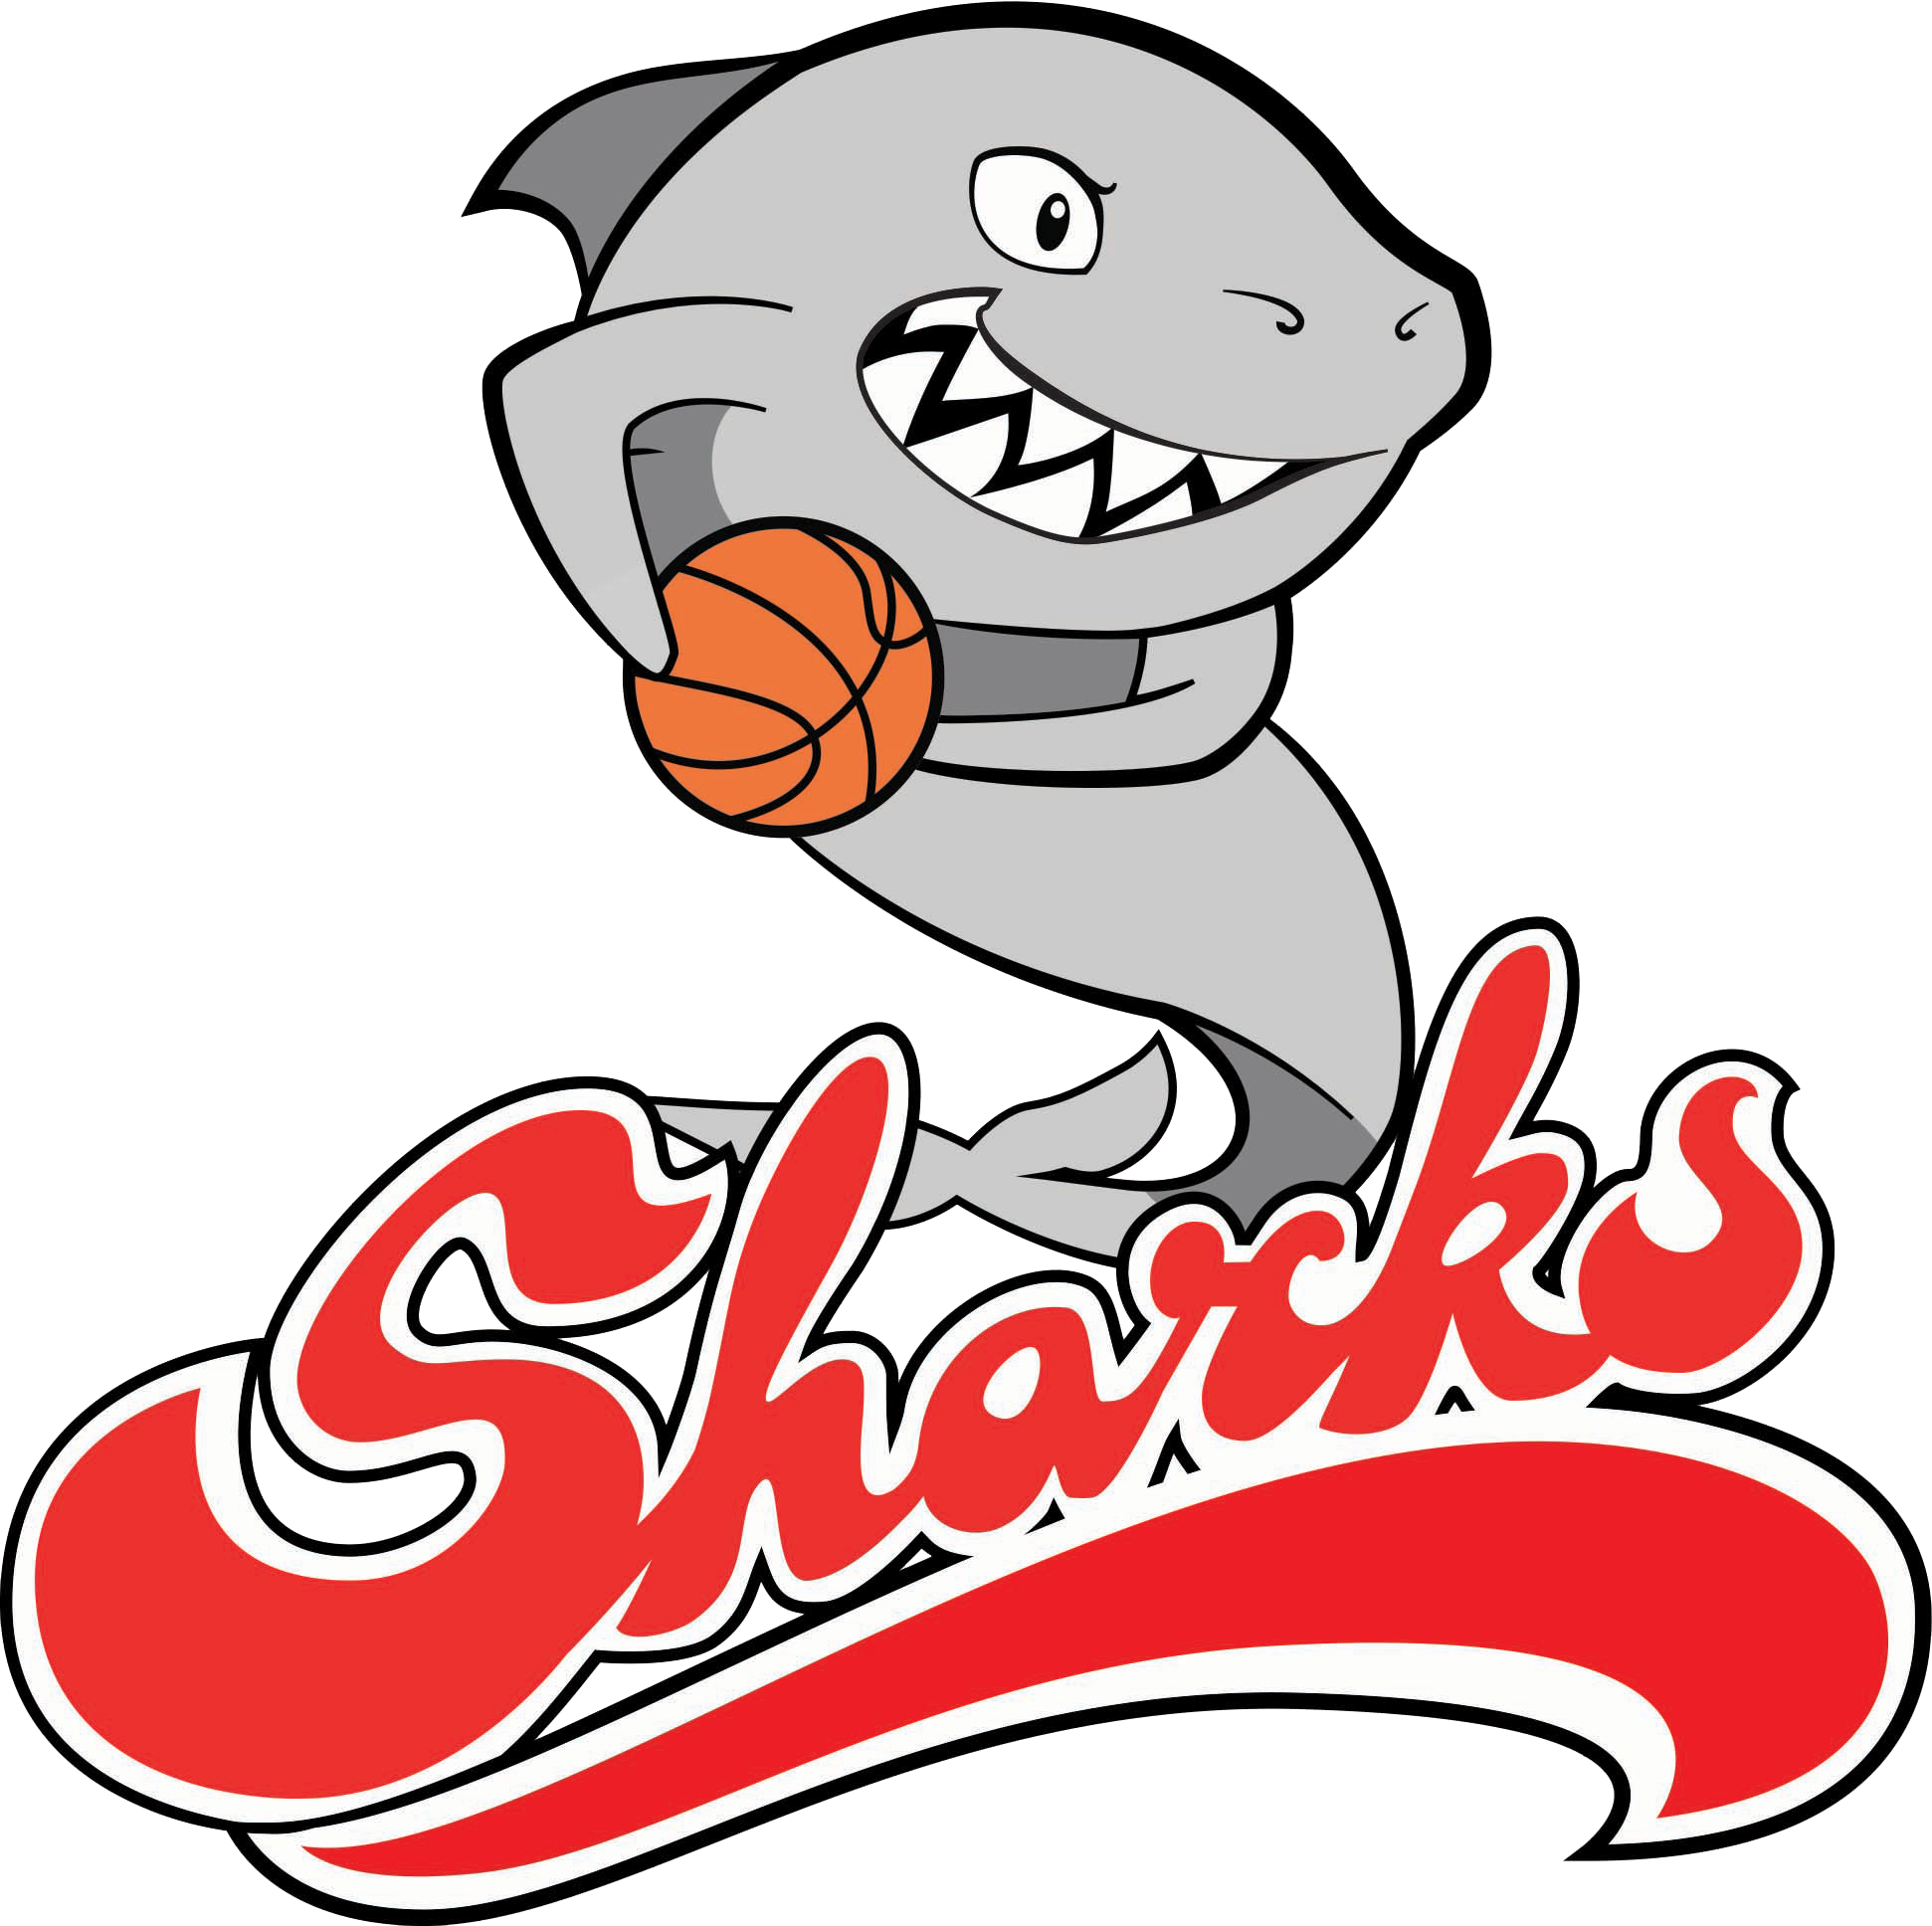 Shark-logo-transparent